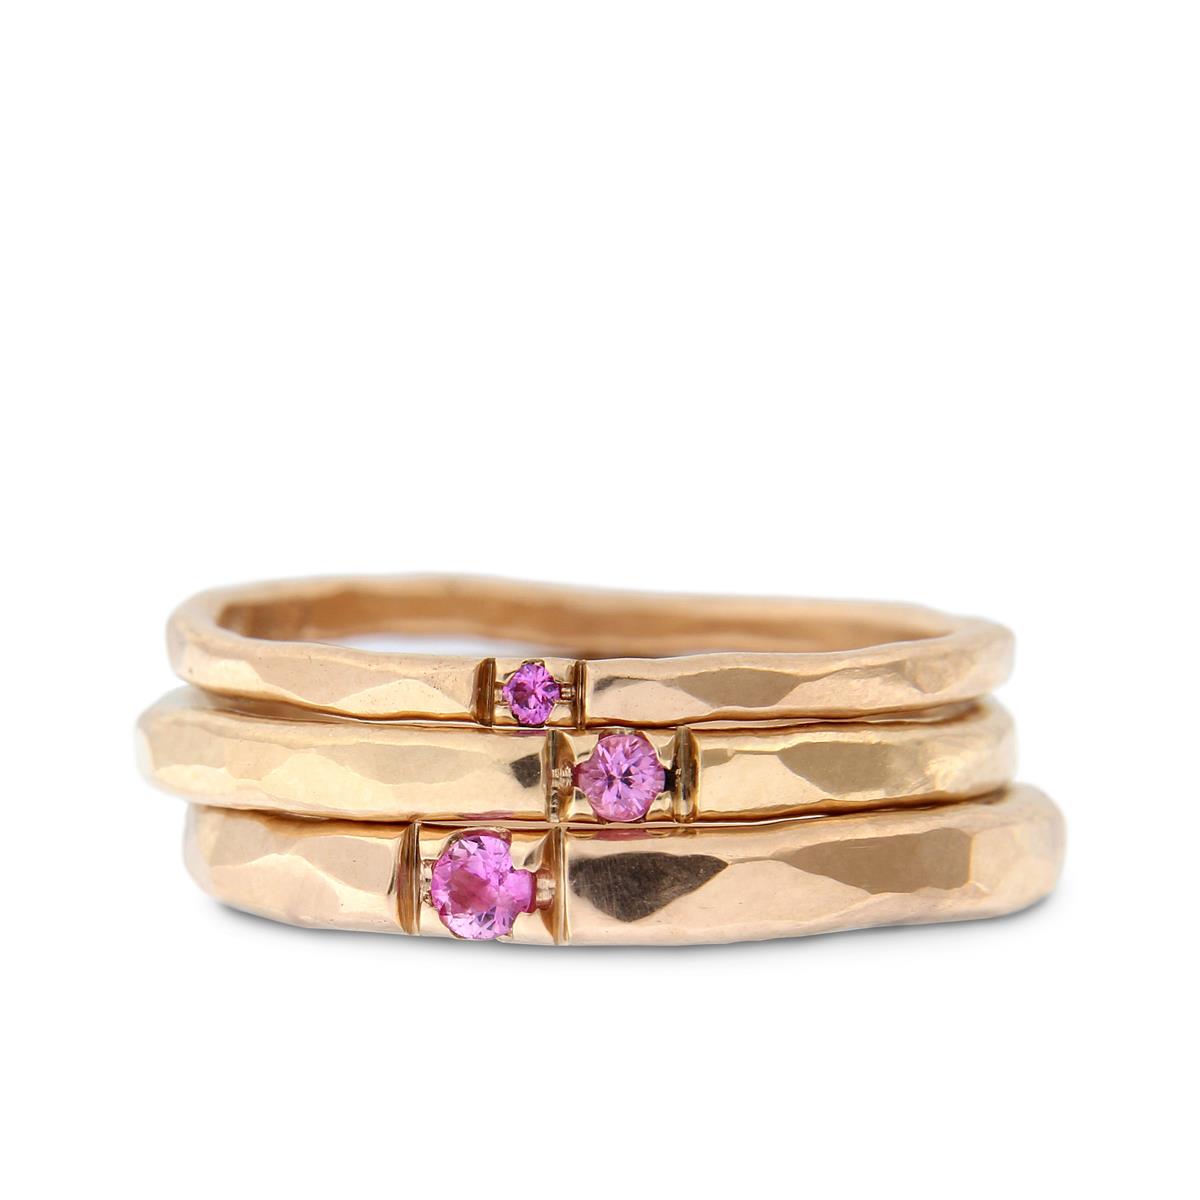 Katie g. Jewellery - Stack - Hammered Rings 1,5 bis 2,5mm in 14kt. Roségold mit rosa Saphir